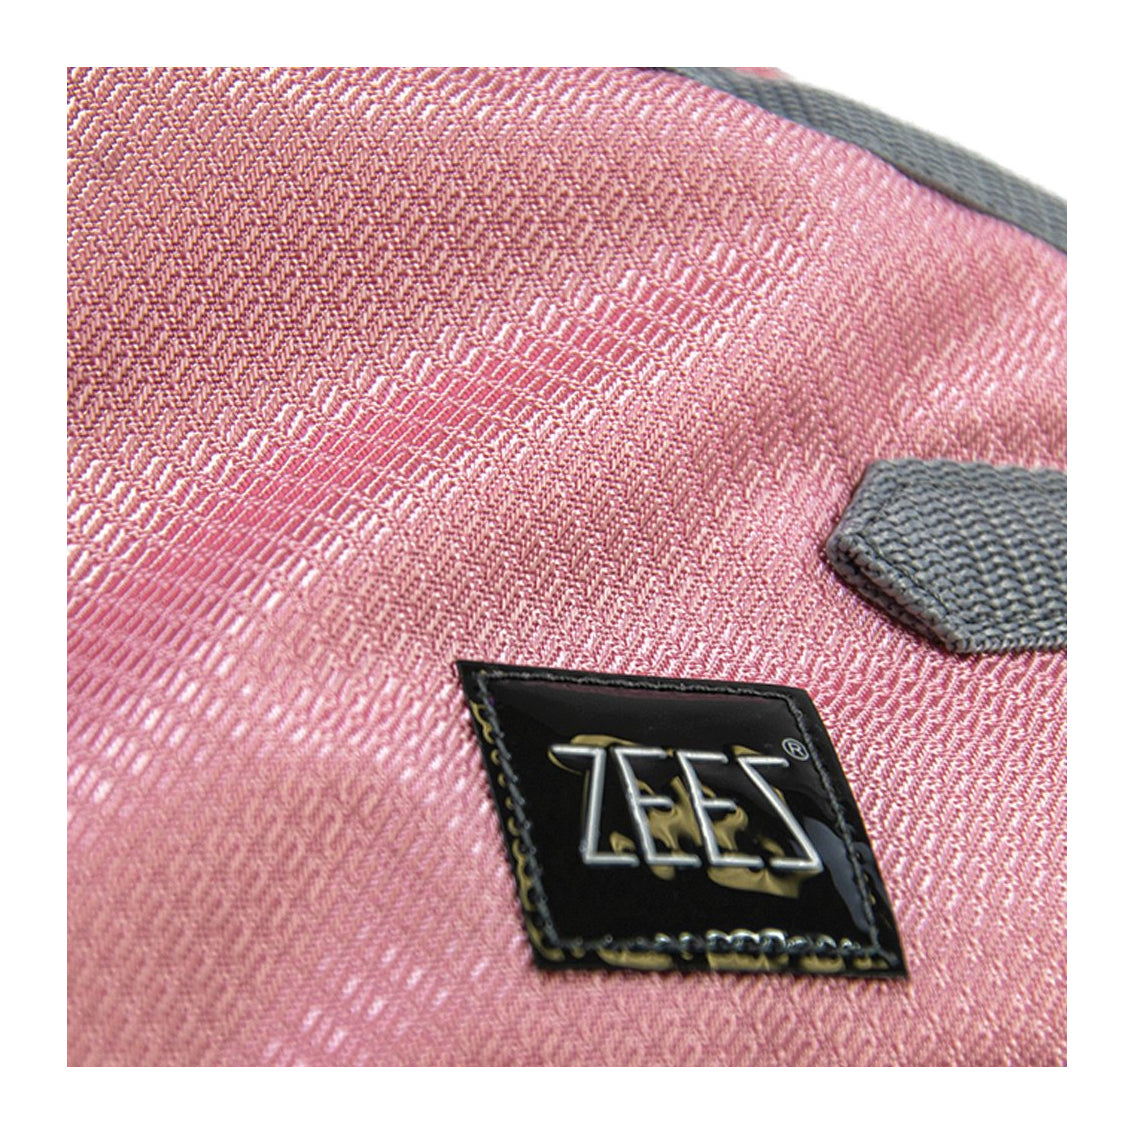 ZeeZ Supreme Dachshund Dog Coat - Flamingo Pink/Grey